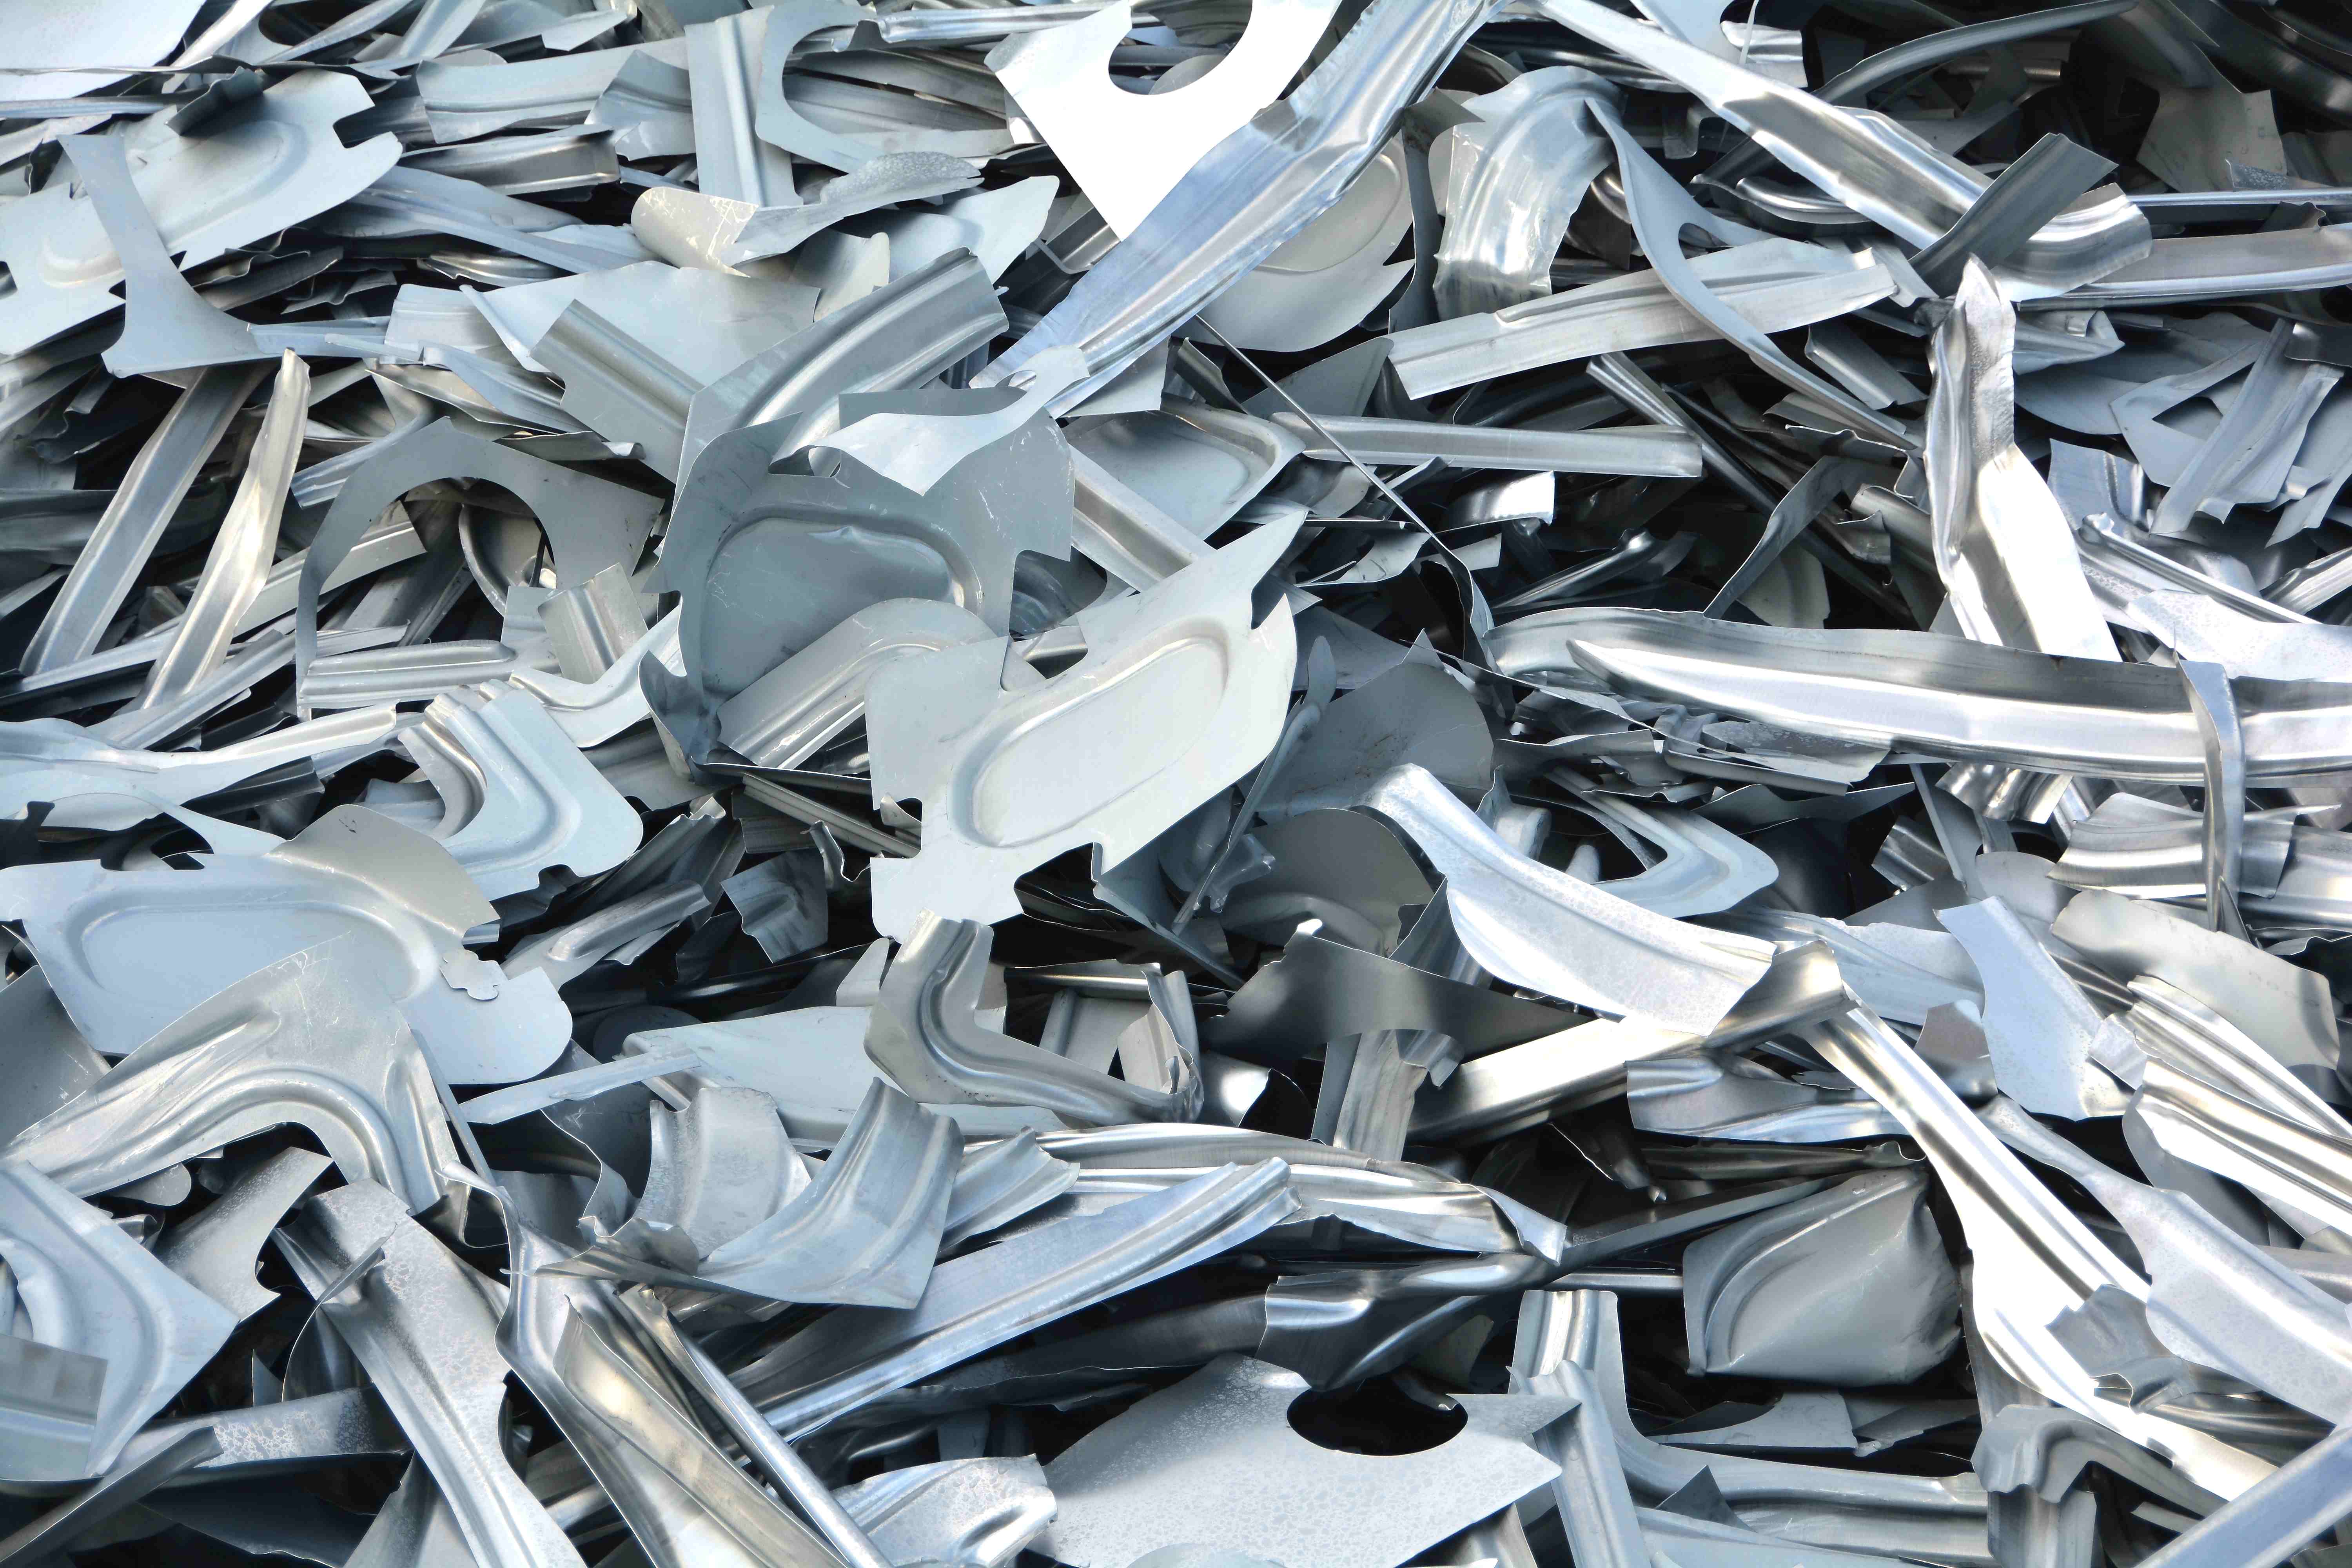 Scrap metal, waste, Shutterstock image